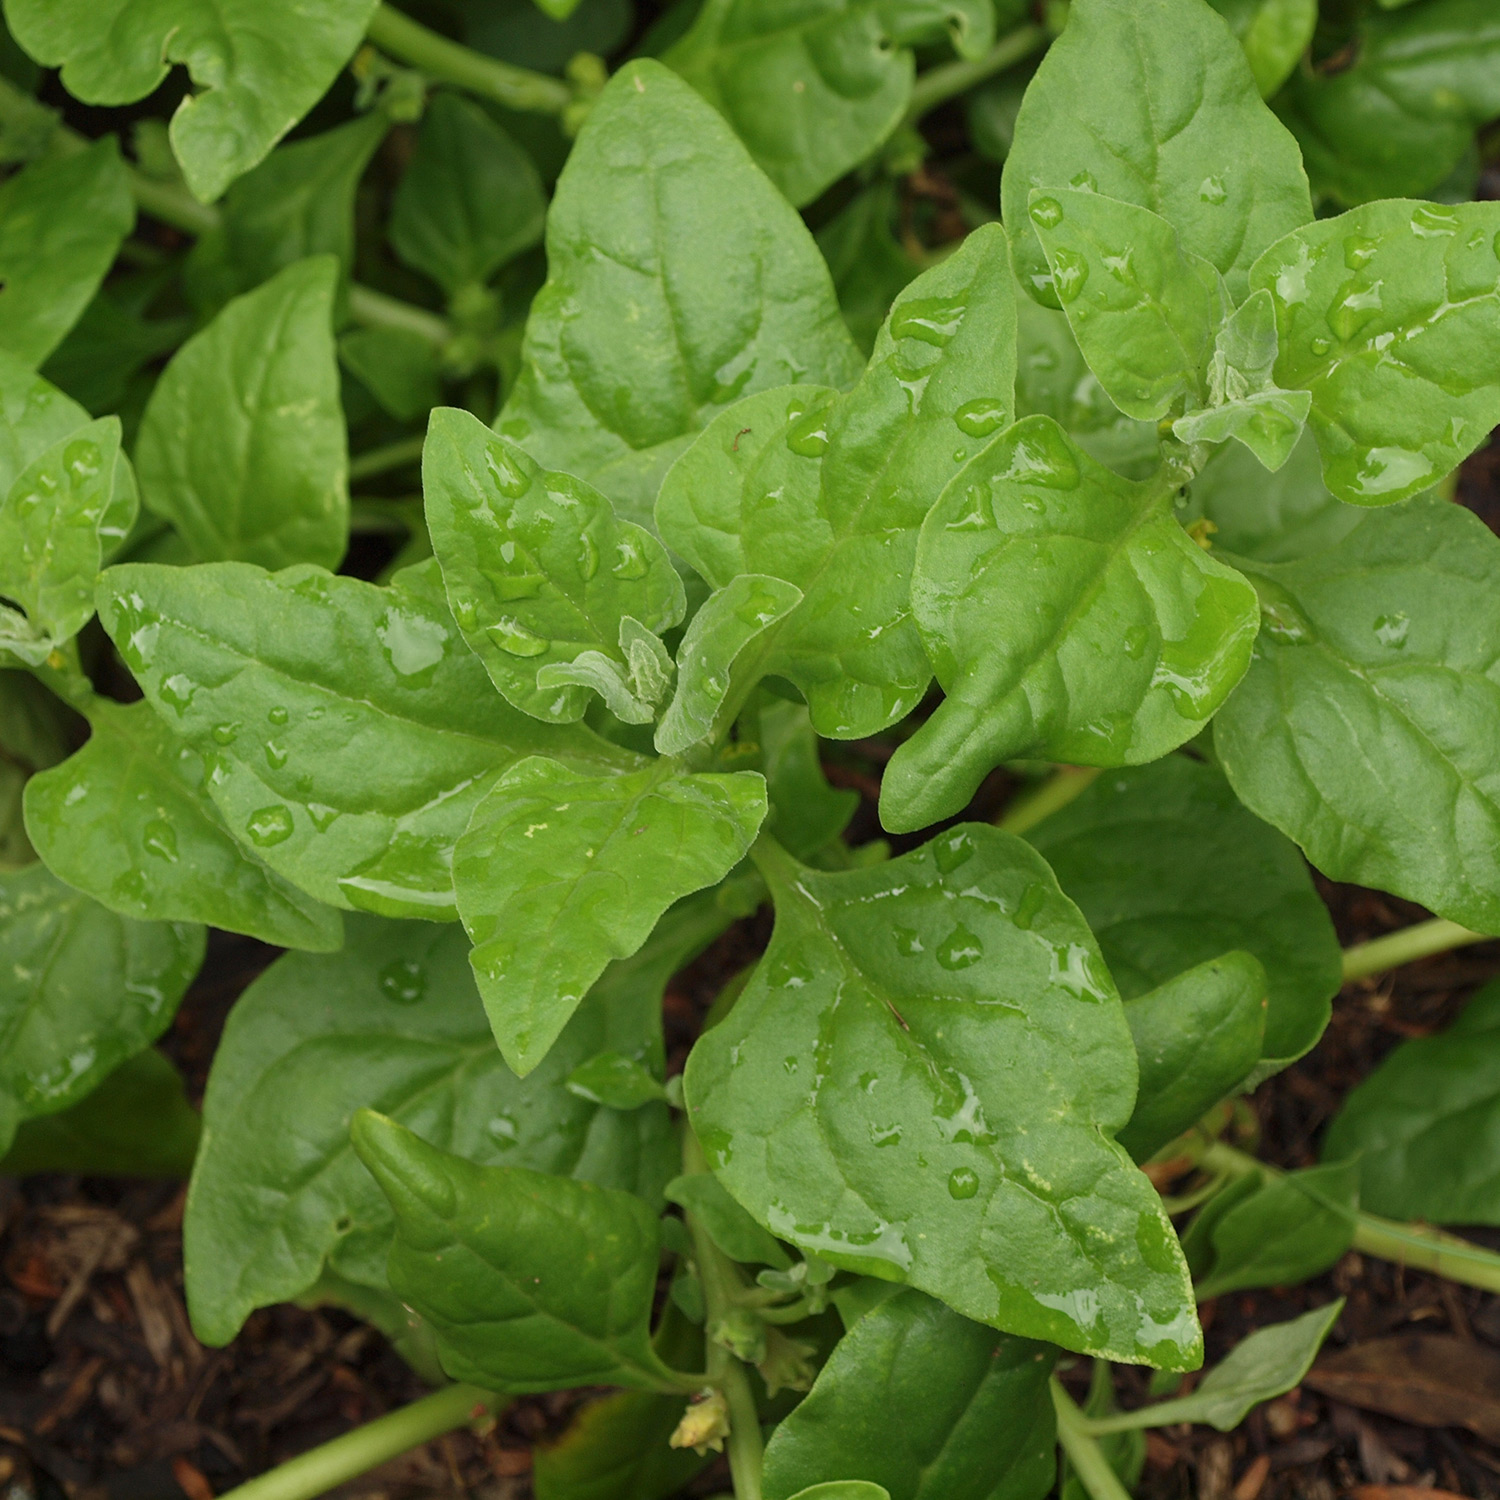 warrigal greens (aka nz spinach)